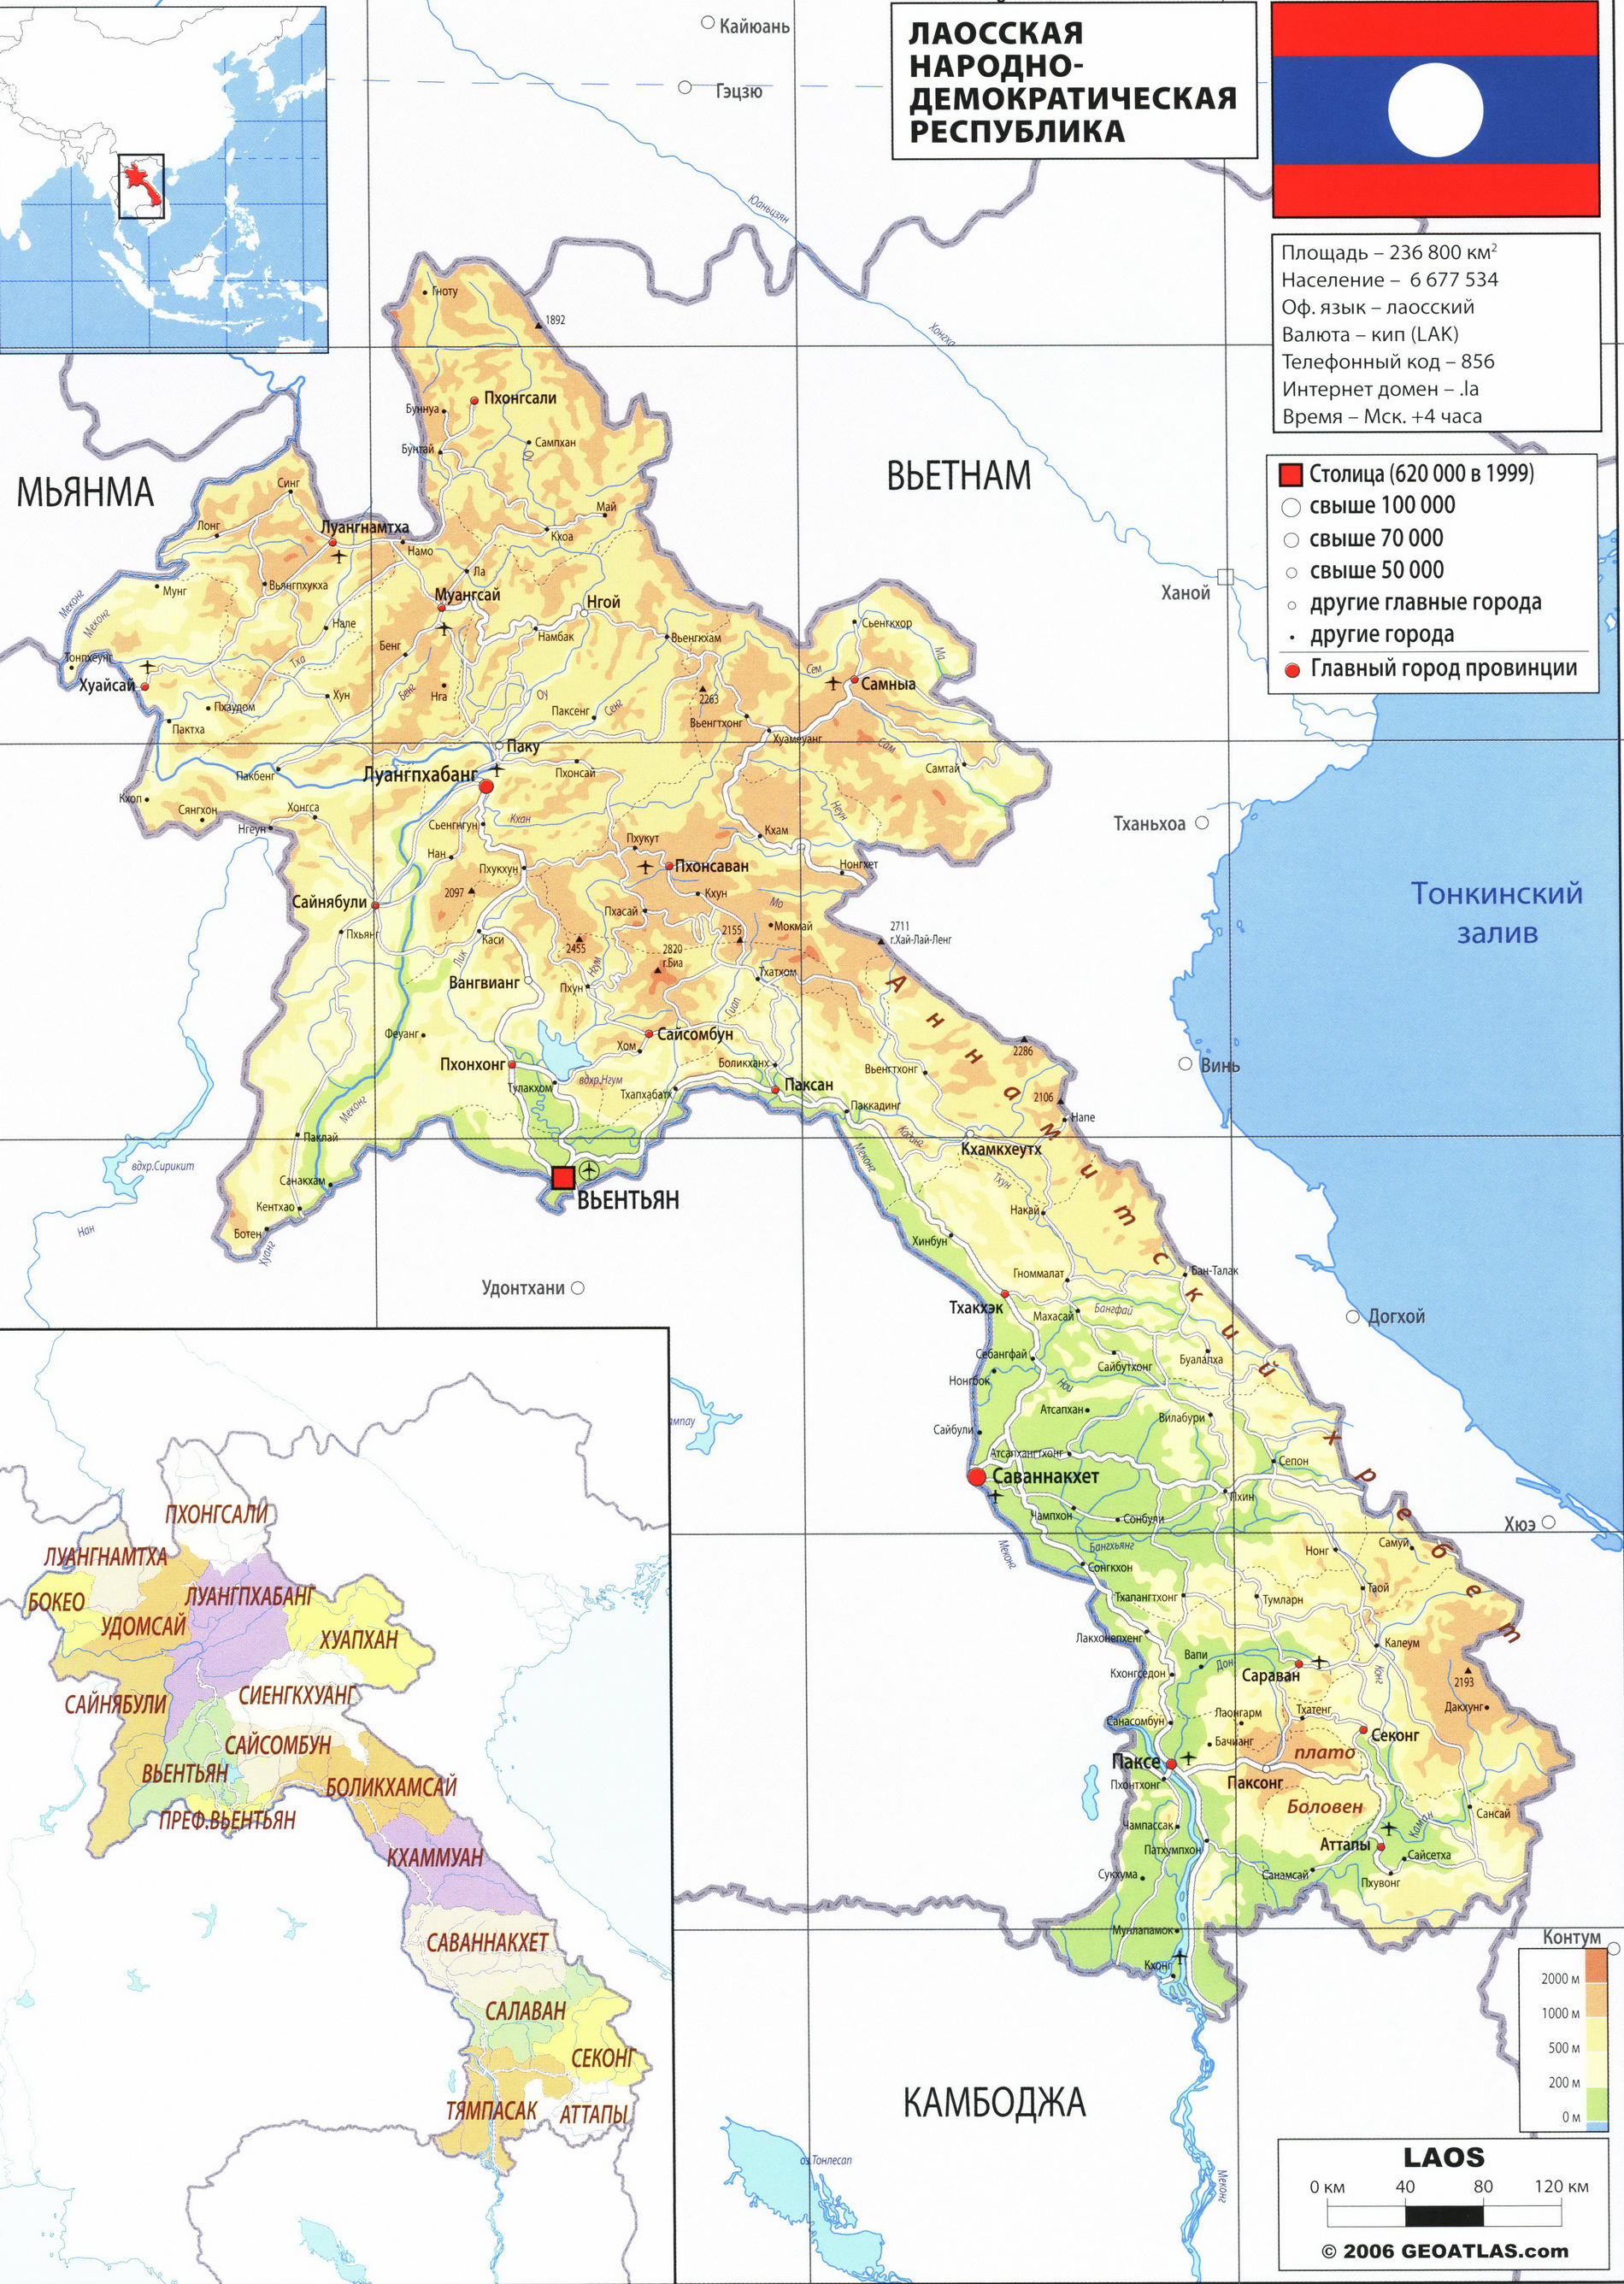 Лаос карта на русском языке